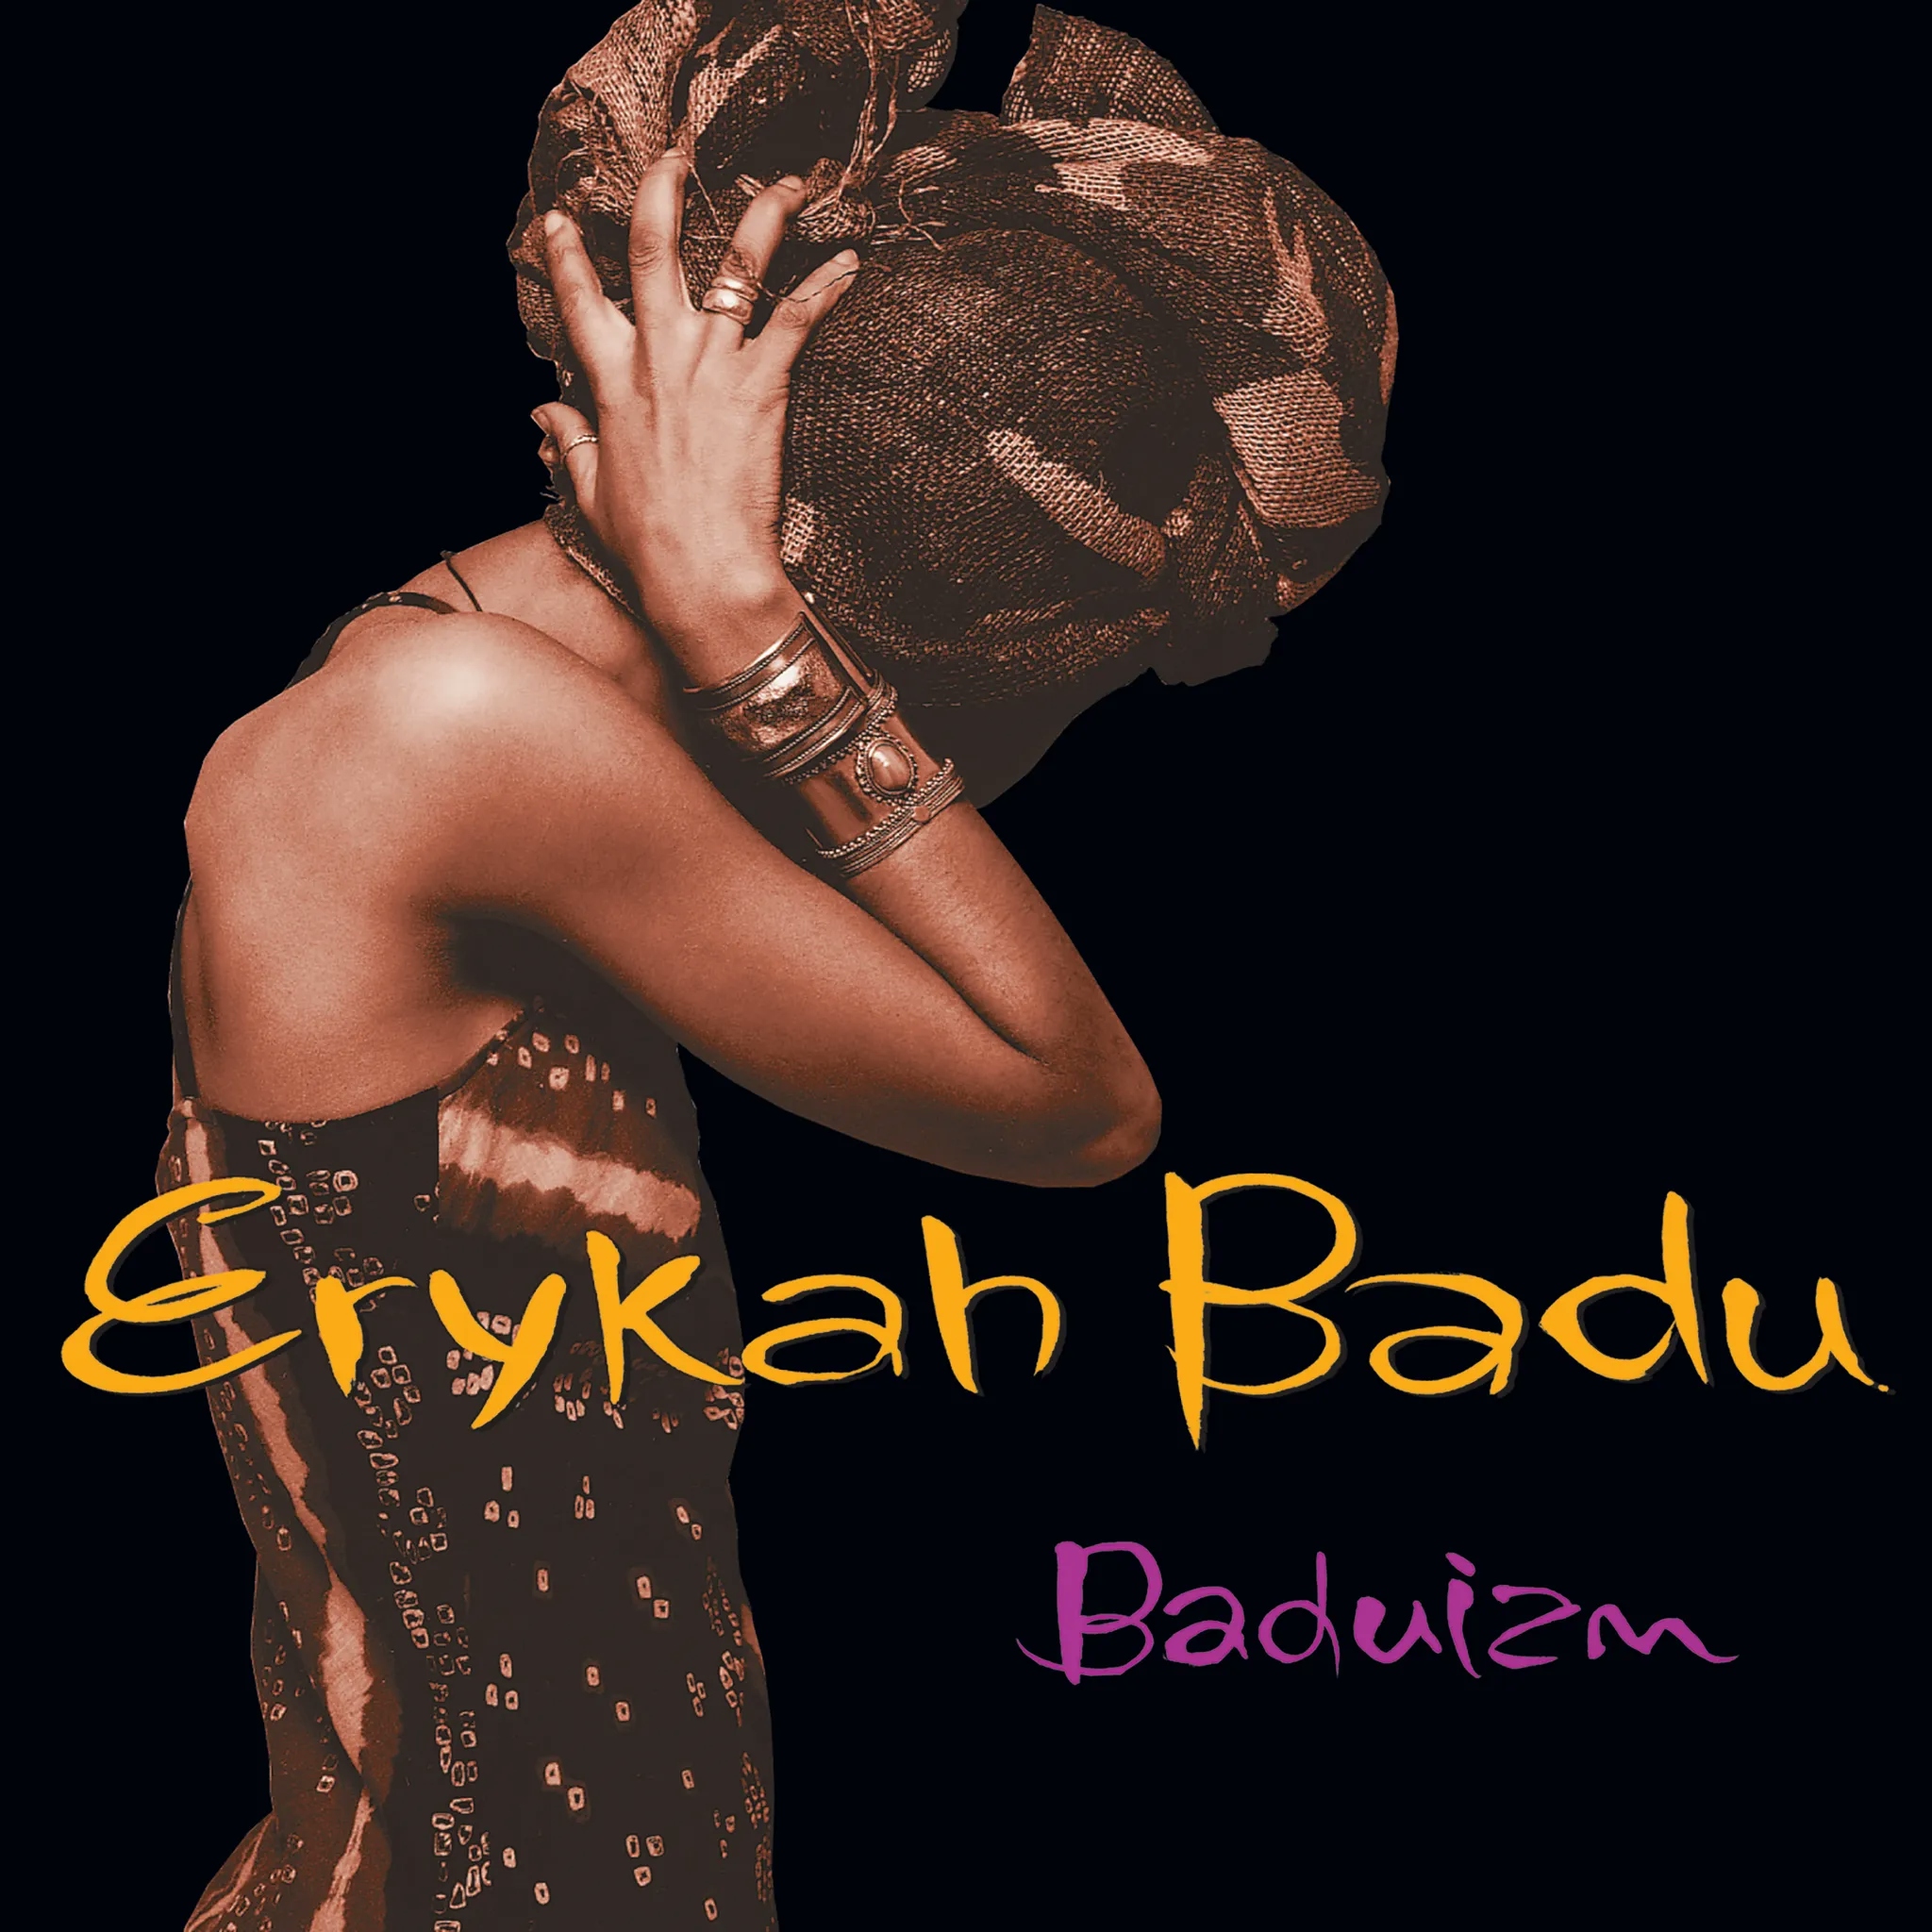 Album artwork for Baduizm by Erykah Badu